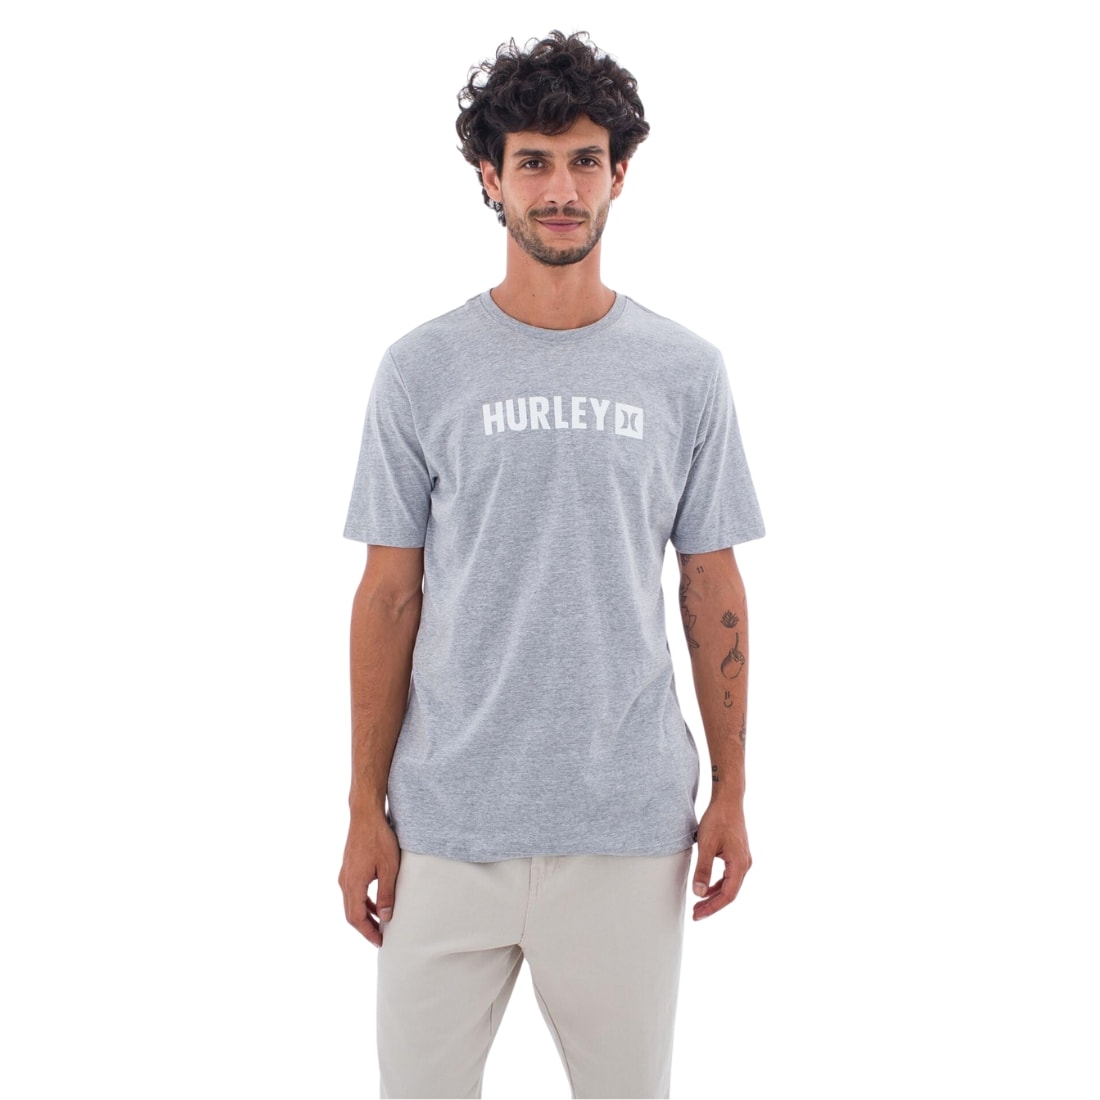 Hurley Everyday The Box T-Shirt - Dark Heather Grey - Mens Surf Brand T-Shirt by Hurley